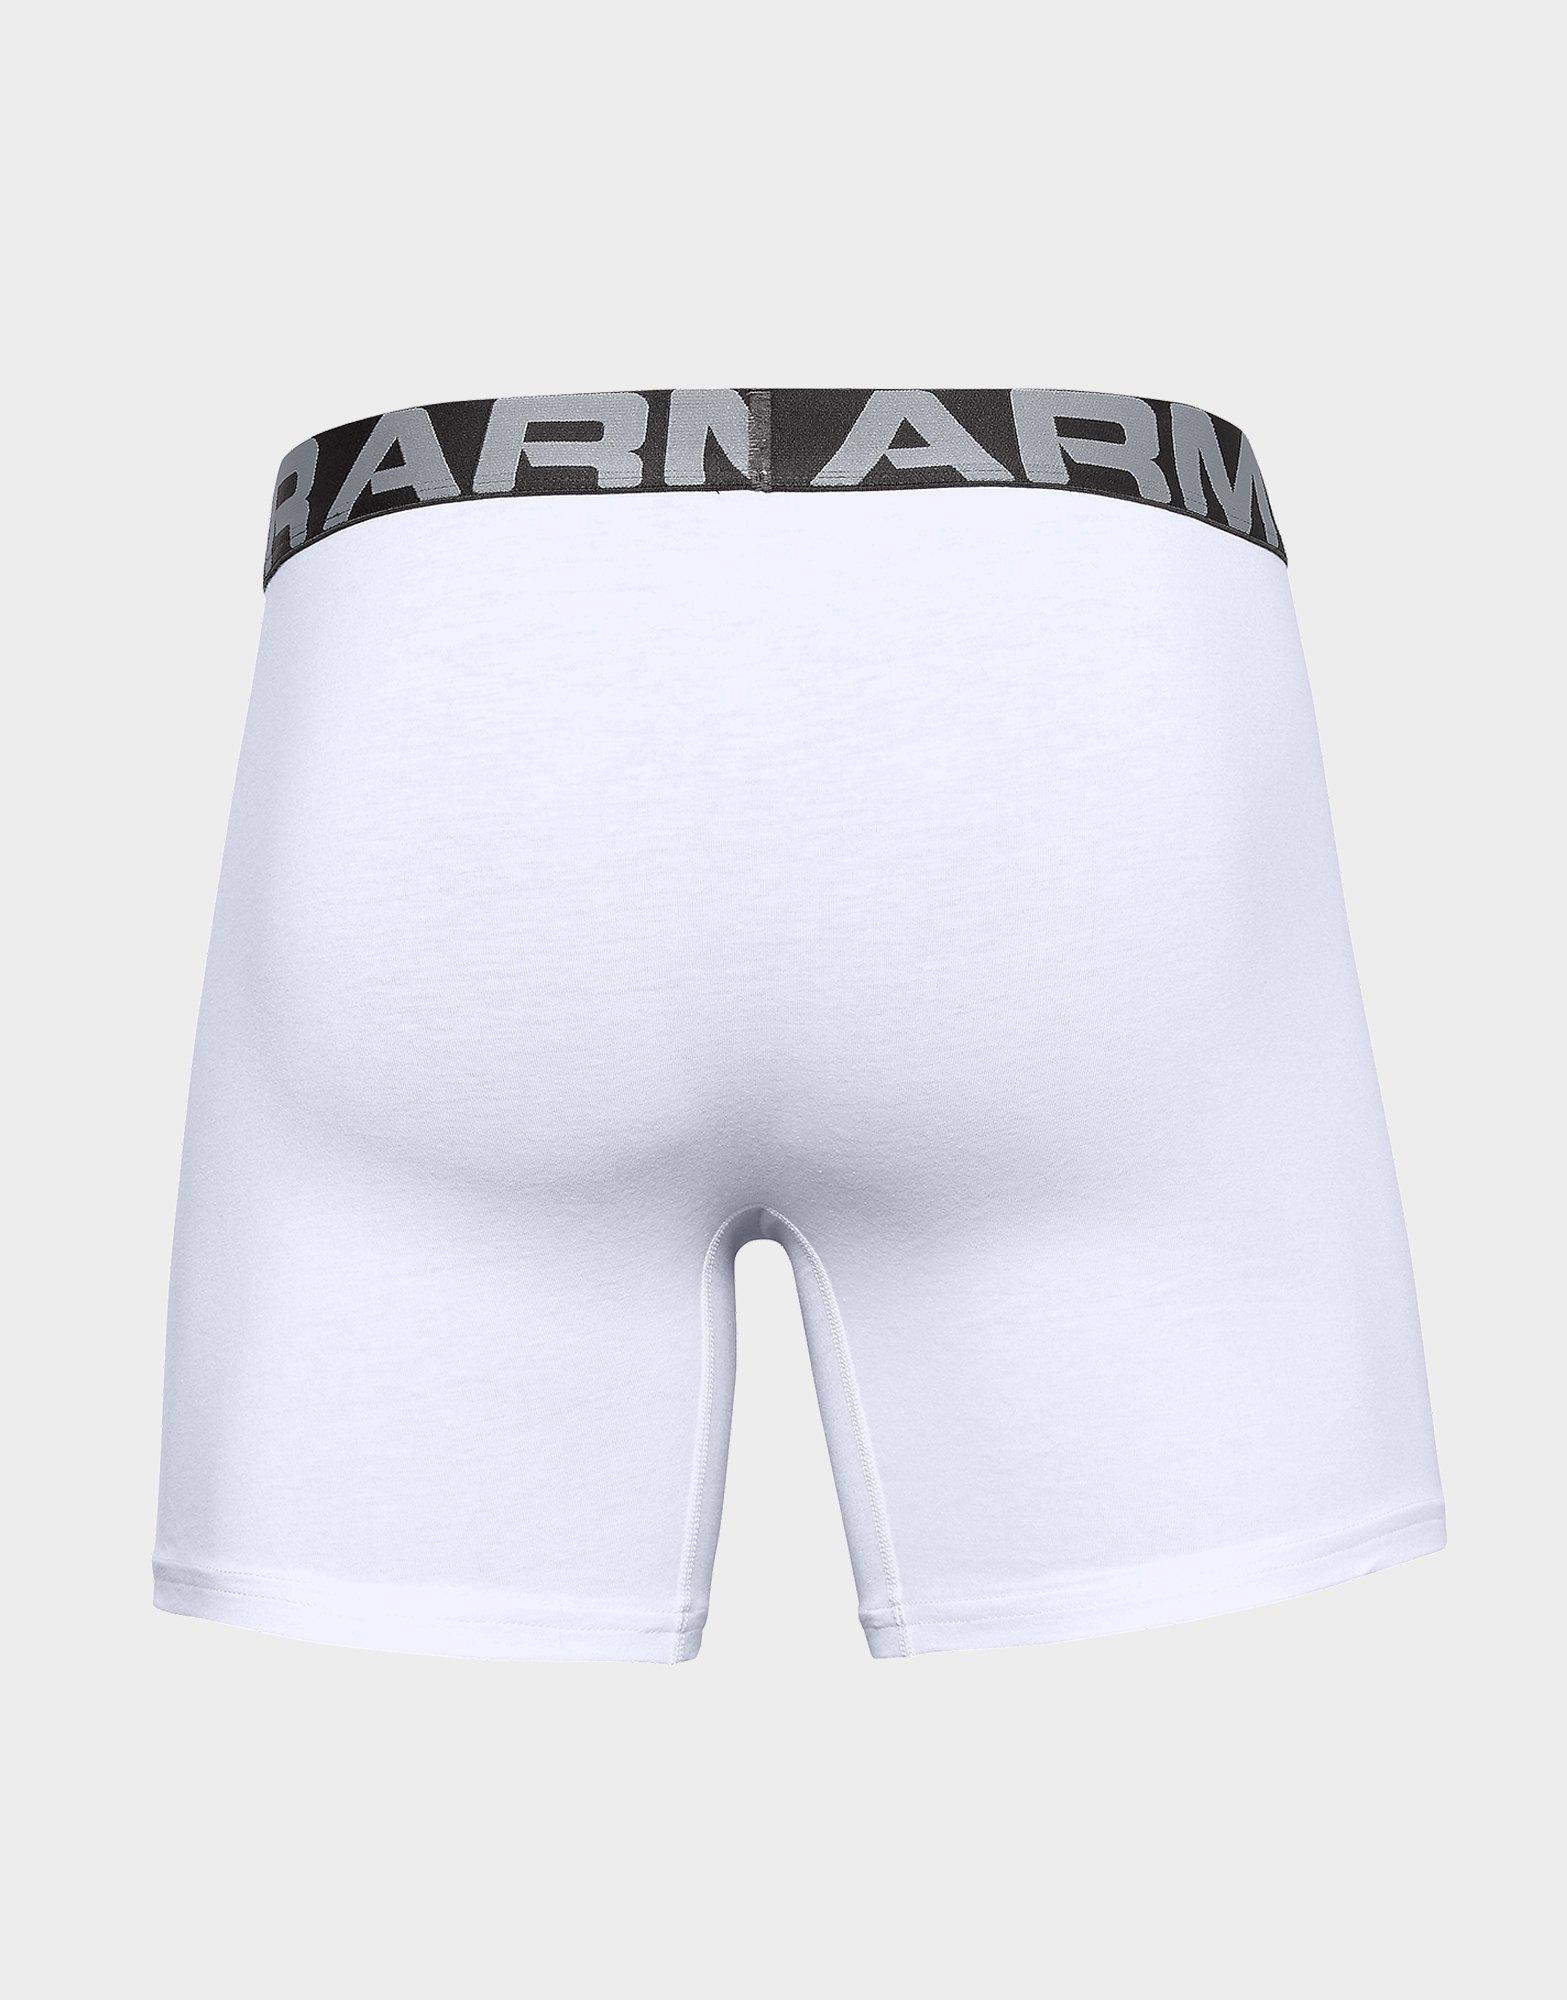 Under Armour Men's Underpants Cotton Charged ® Boxerjock ® 15 cm 3er Pack White 